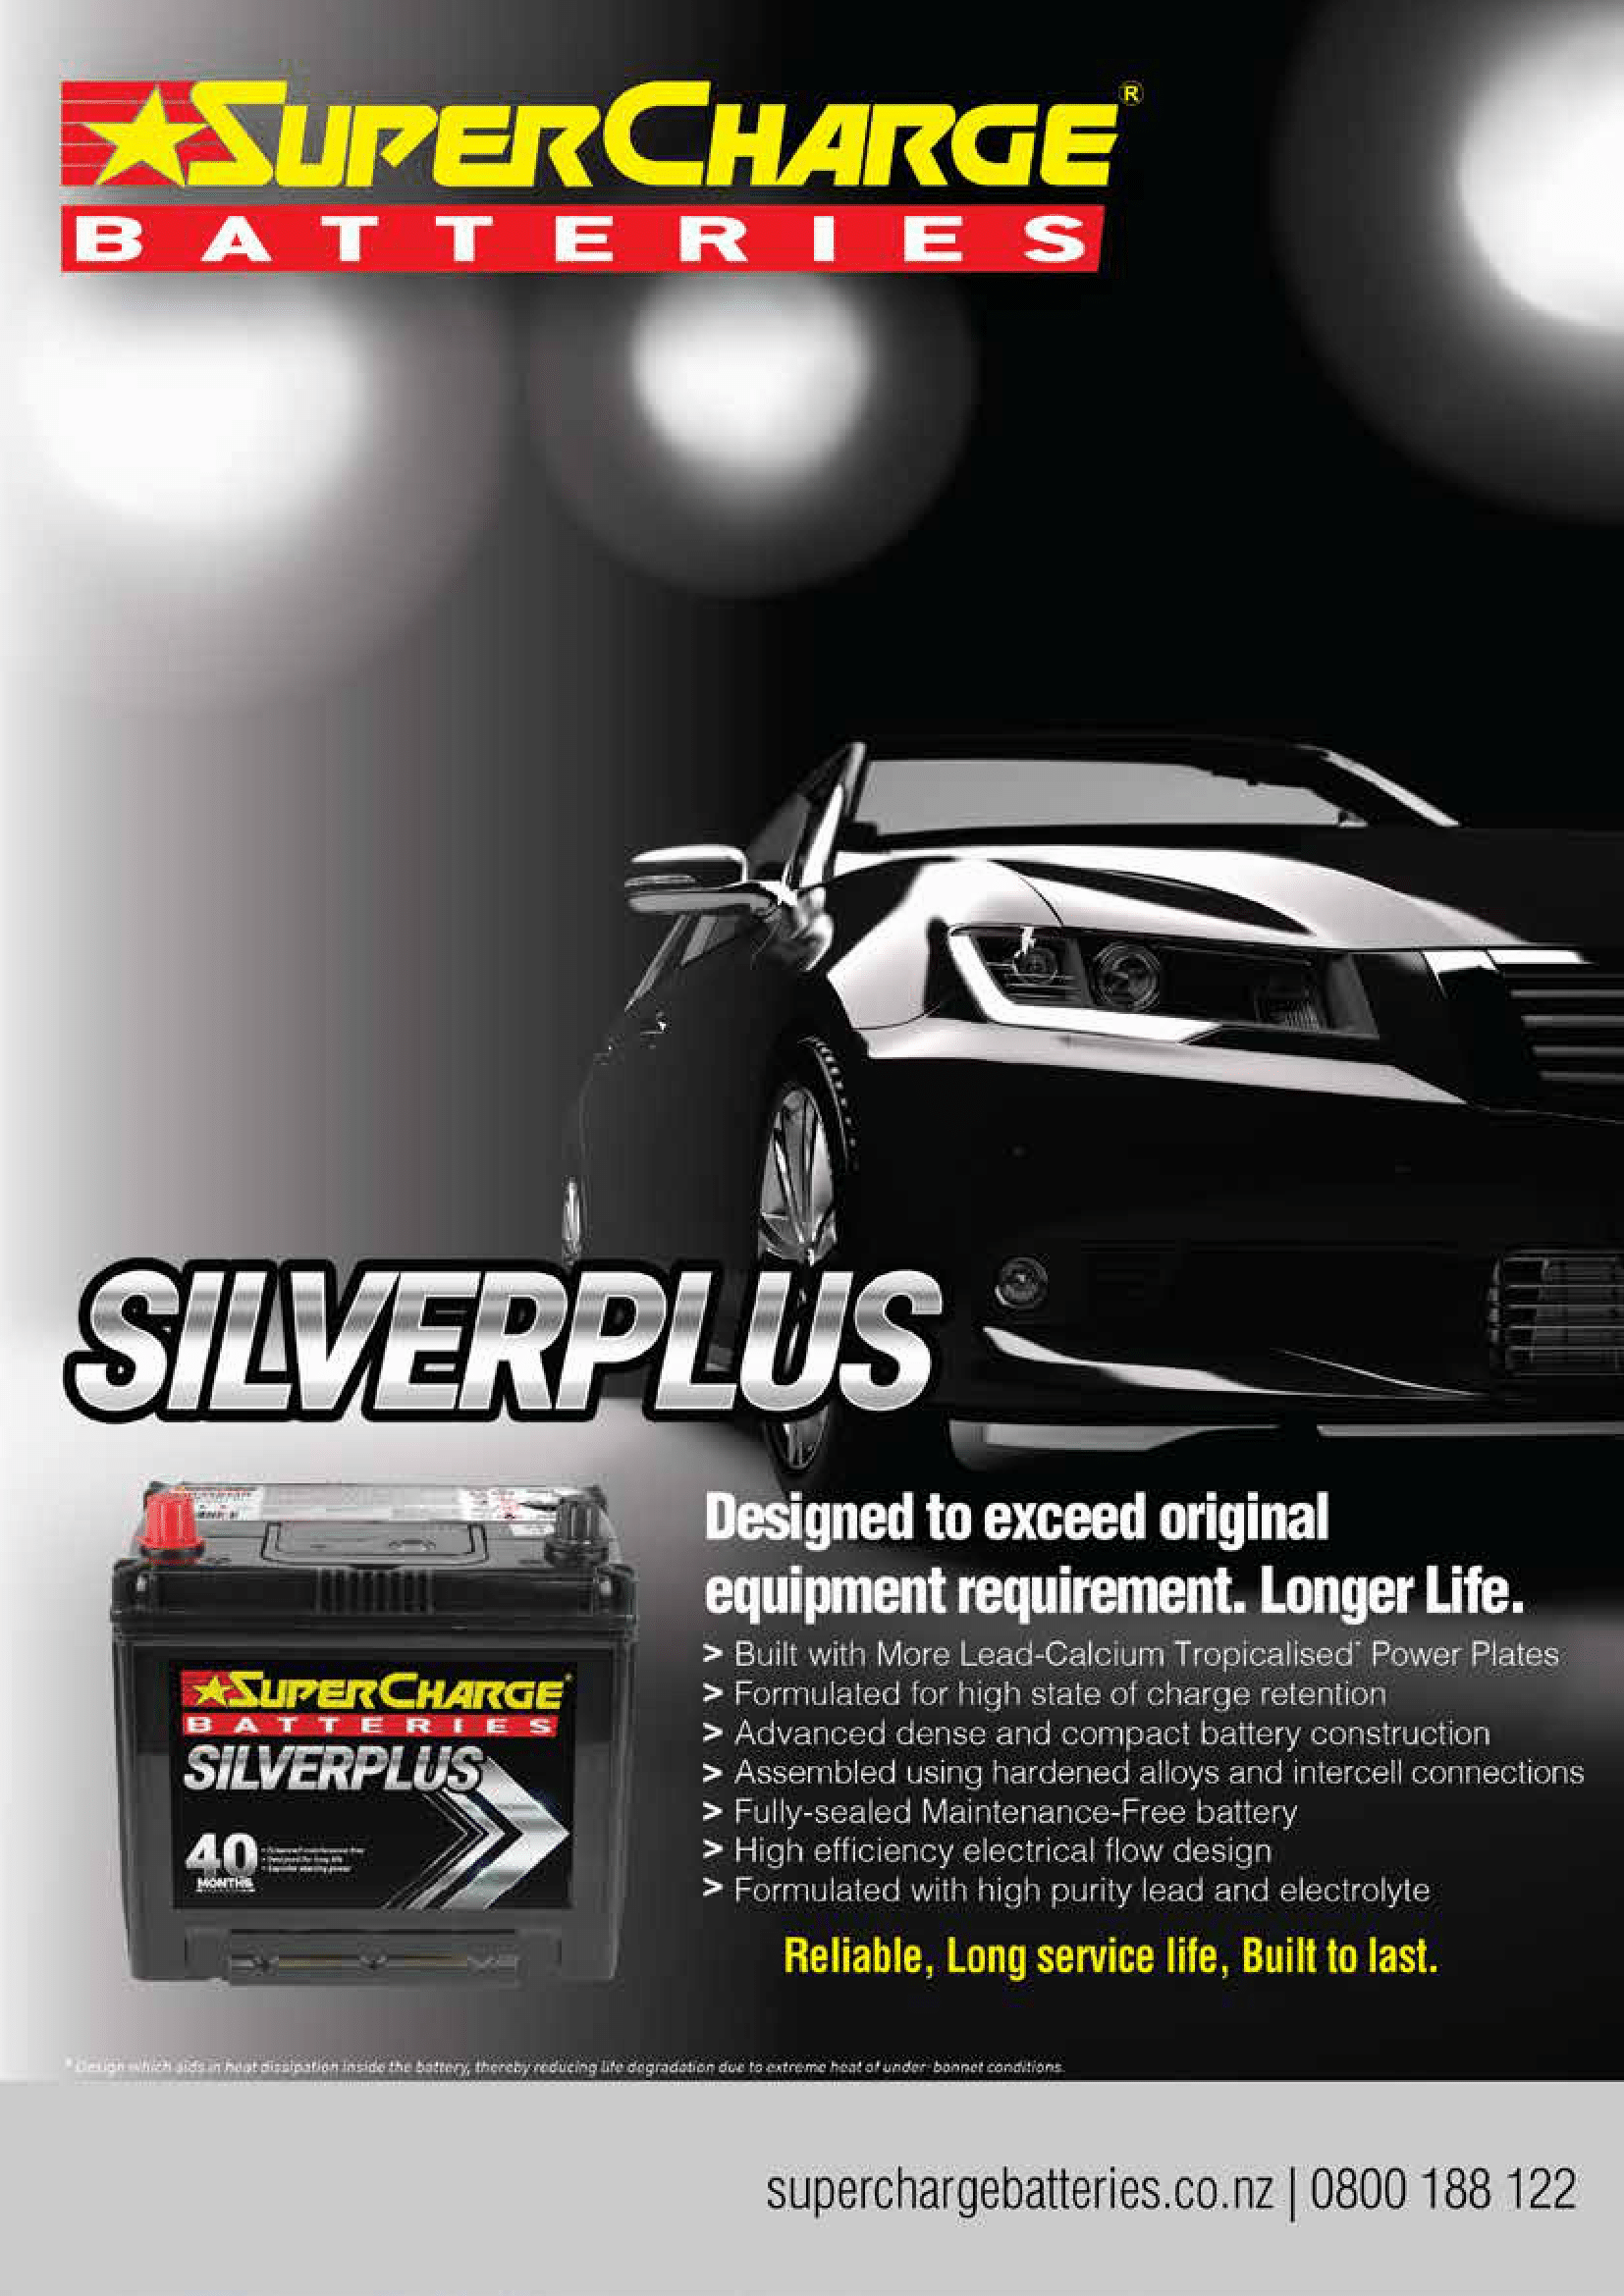 Silverplus